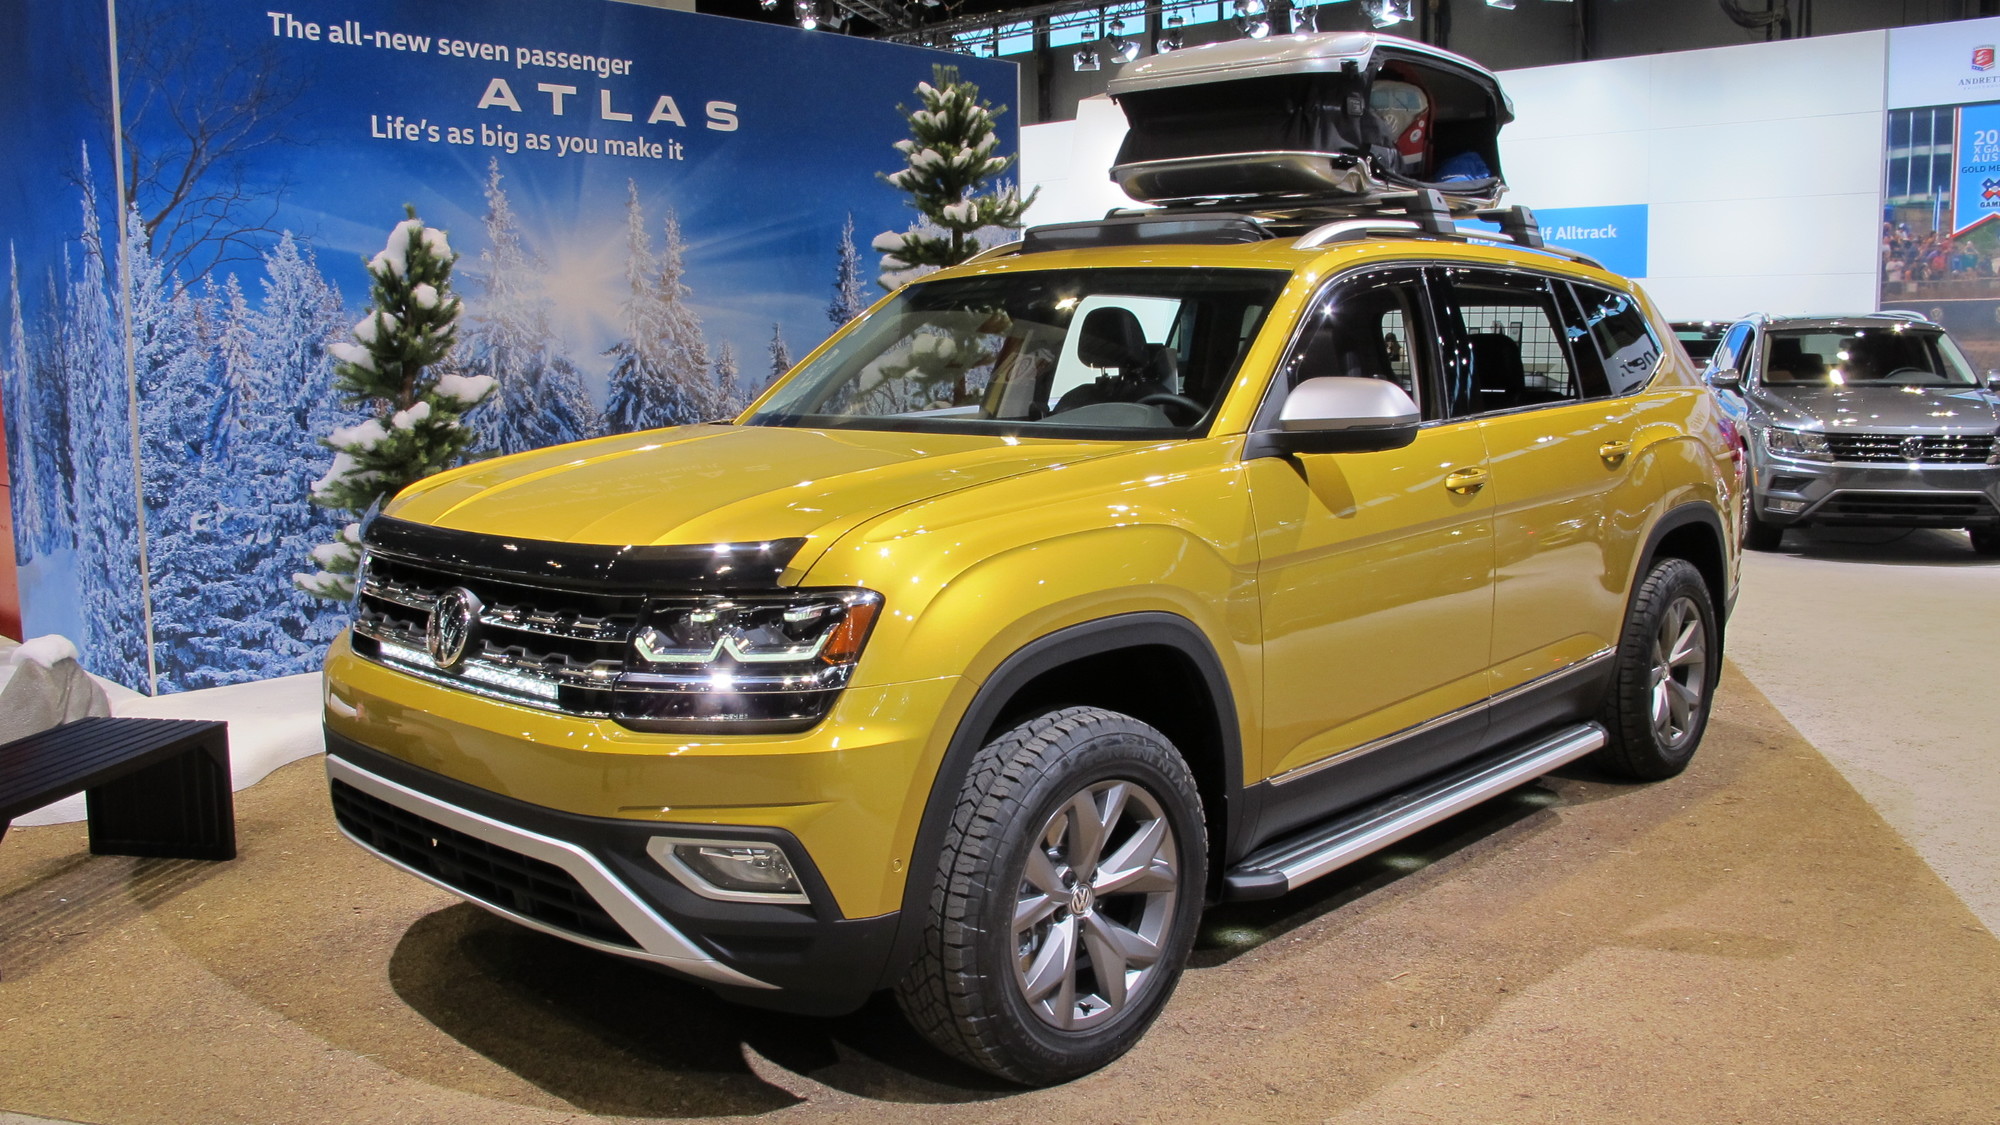 Volkswagen Atlas Weekend Edition, 2017 Chicago auto show